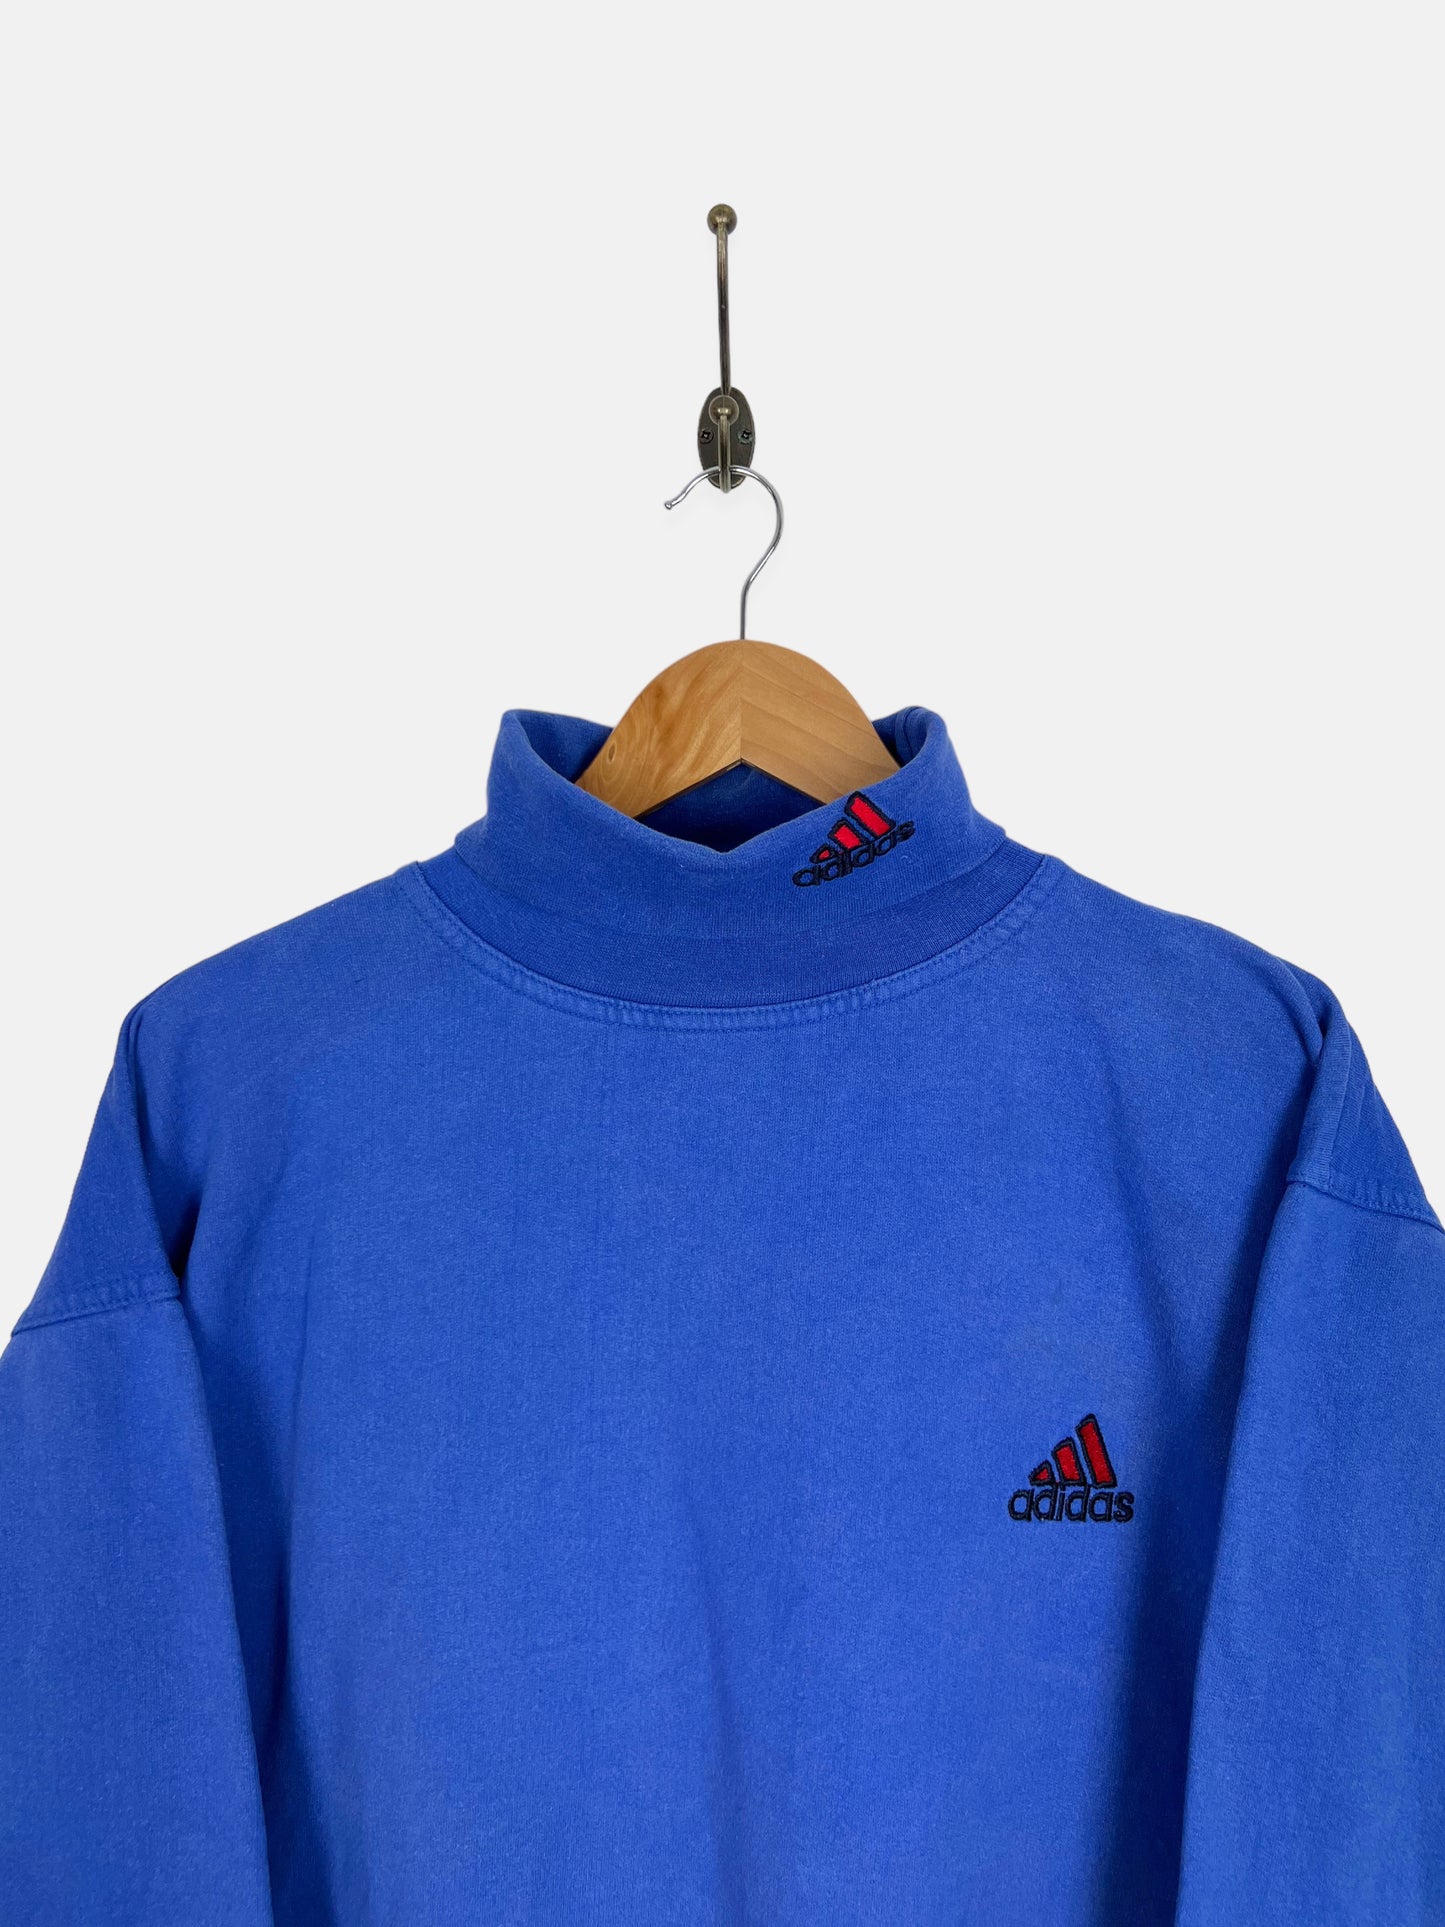 90's Adidas Embroidered Vintage Turtleneck Lightweight Sweatshirt Size L